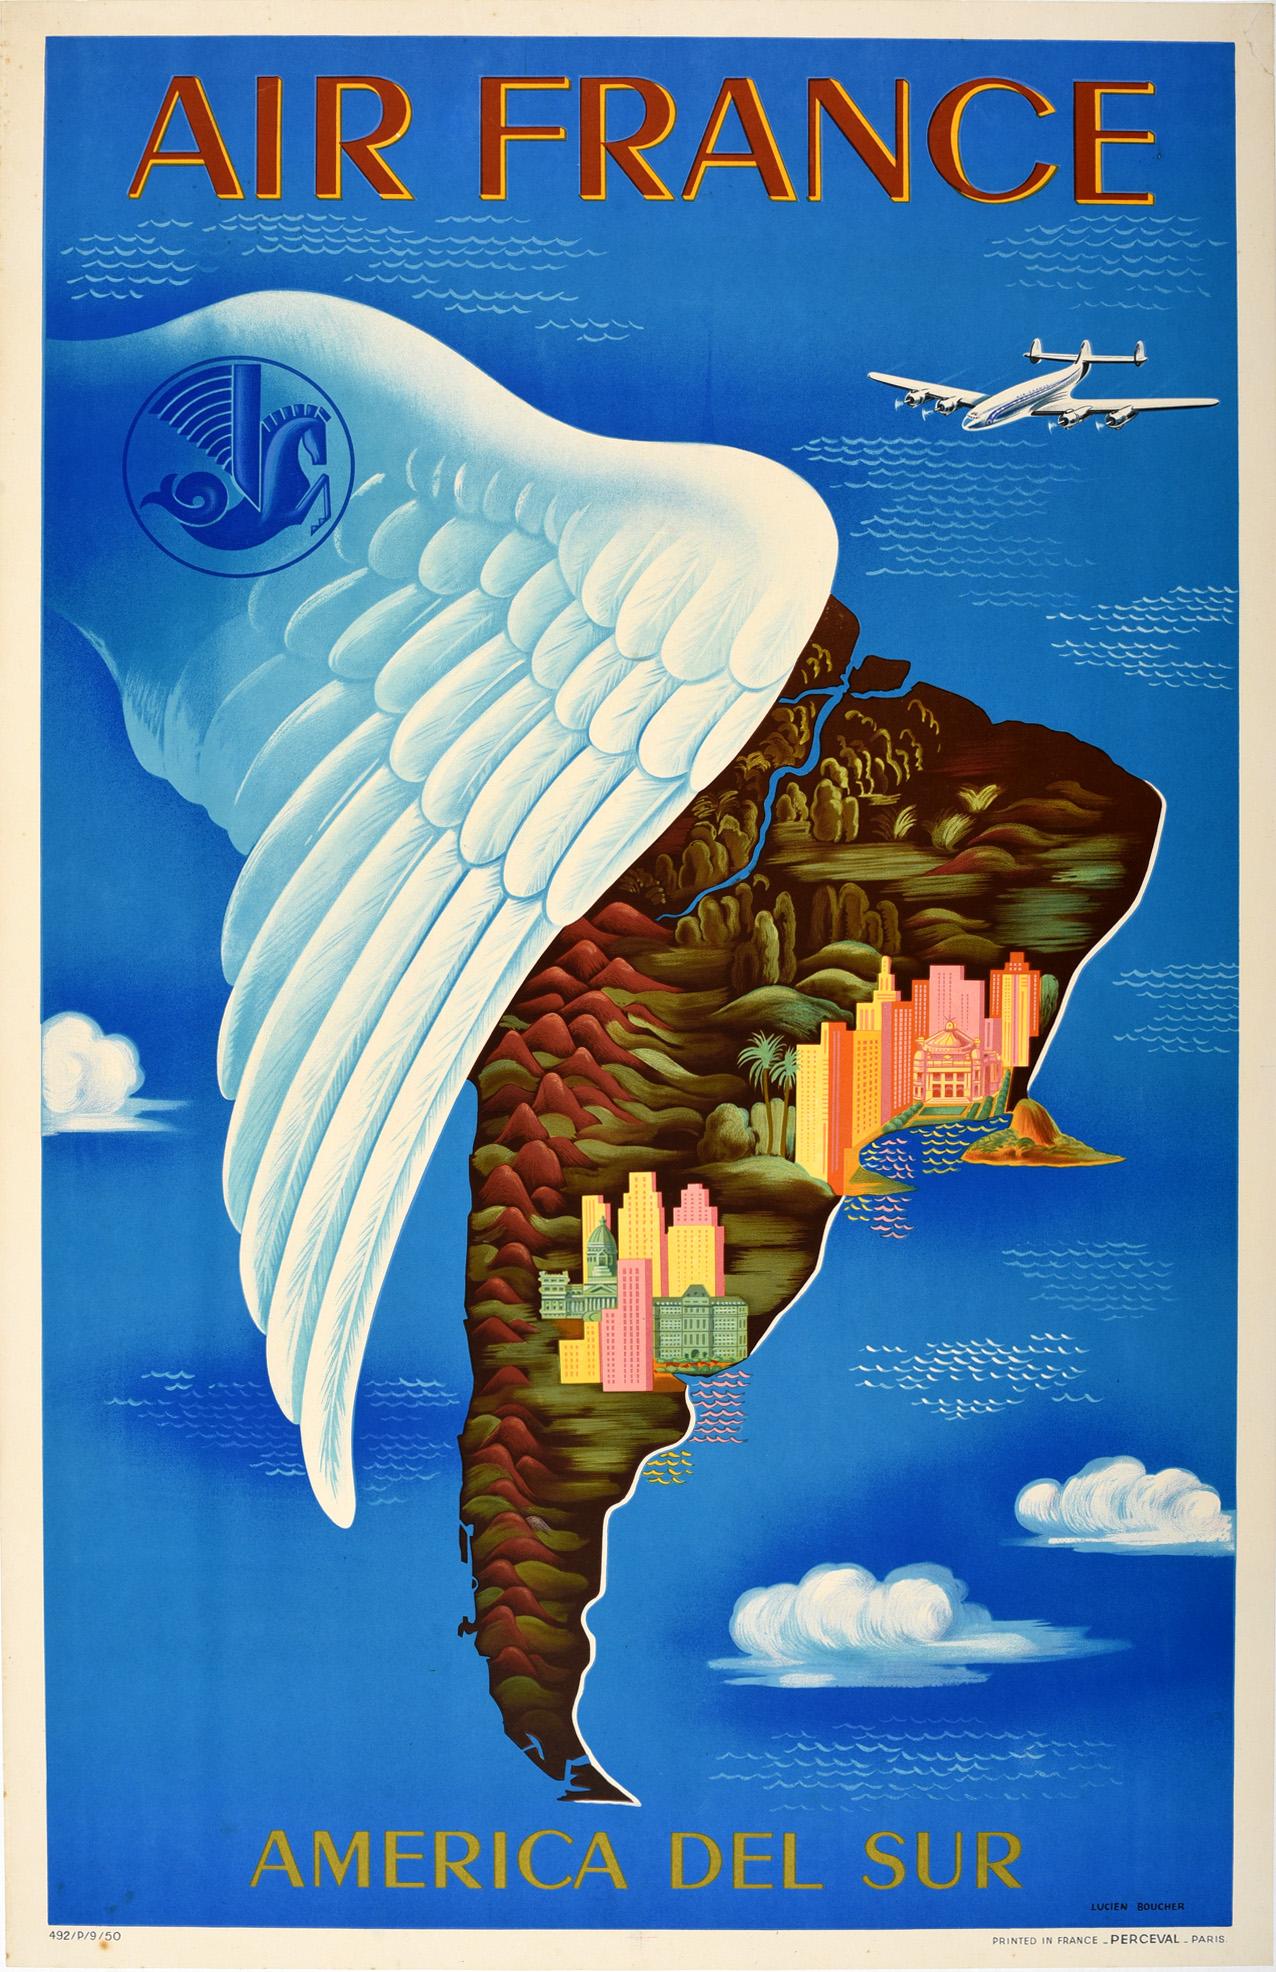 Lucien Boucher Print - Original Vintage Travel Poster By Boucher For Air France South America Del Sur